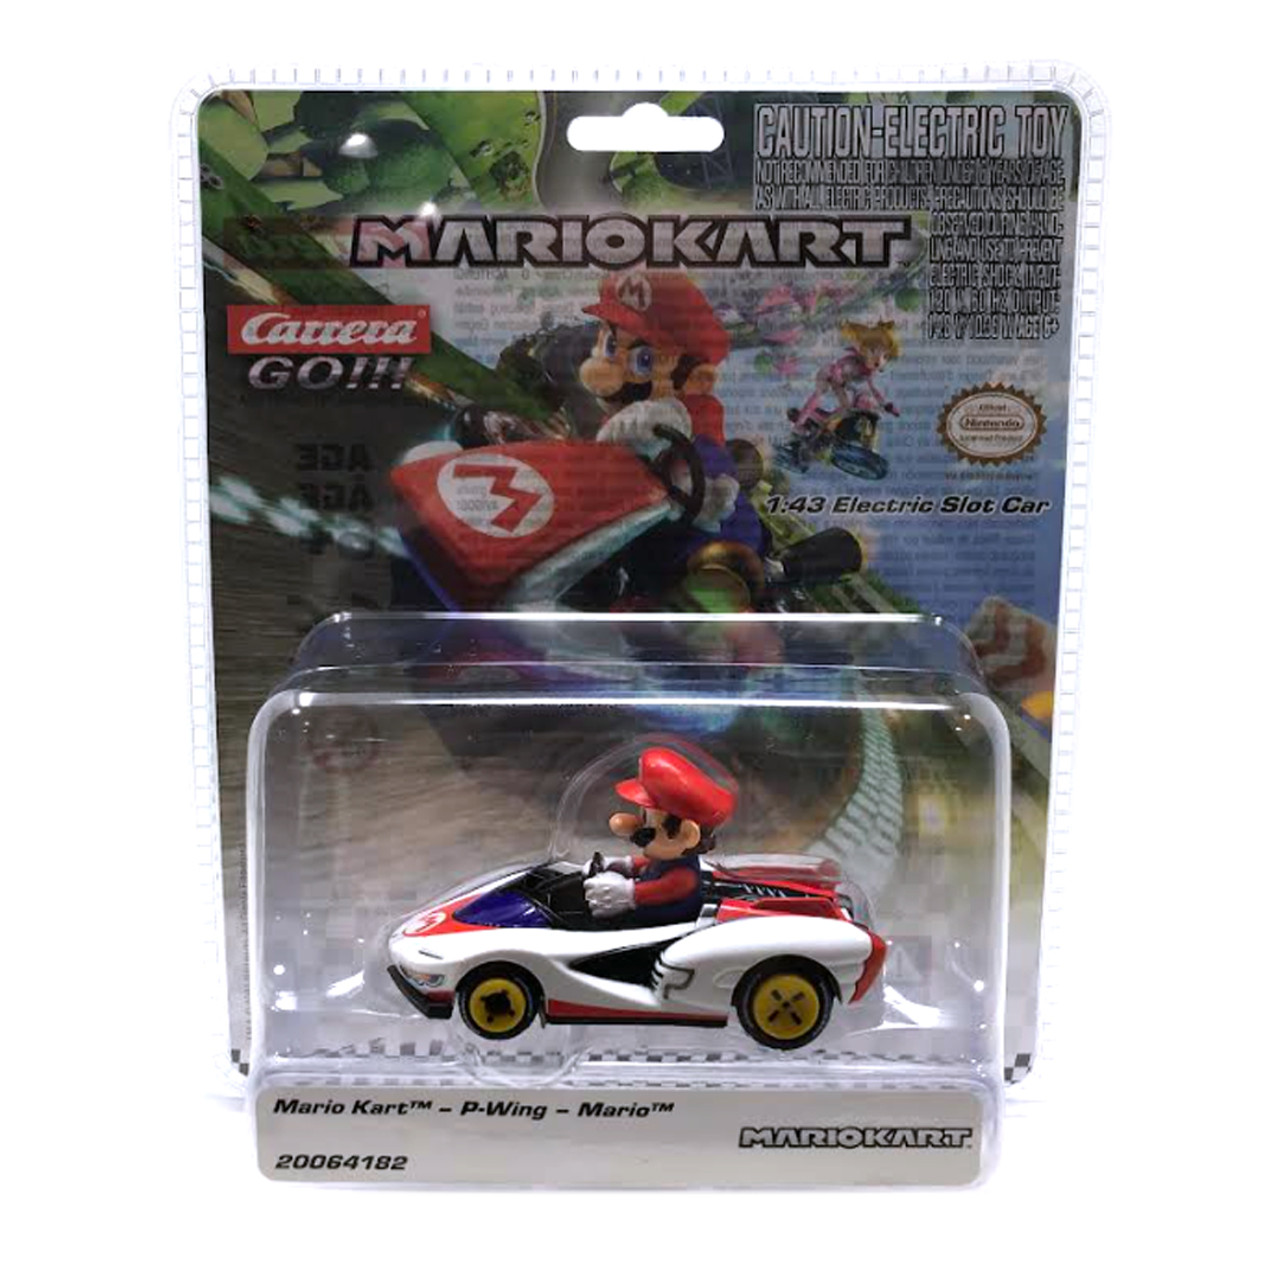 64034 Carrera Go!!! Nintendo Mario Kart 8 Luigi 1:43 Slot Car